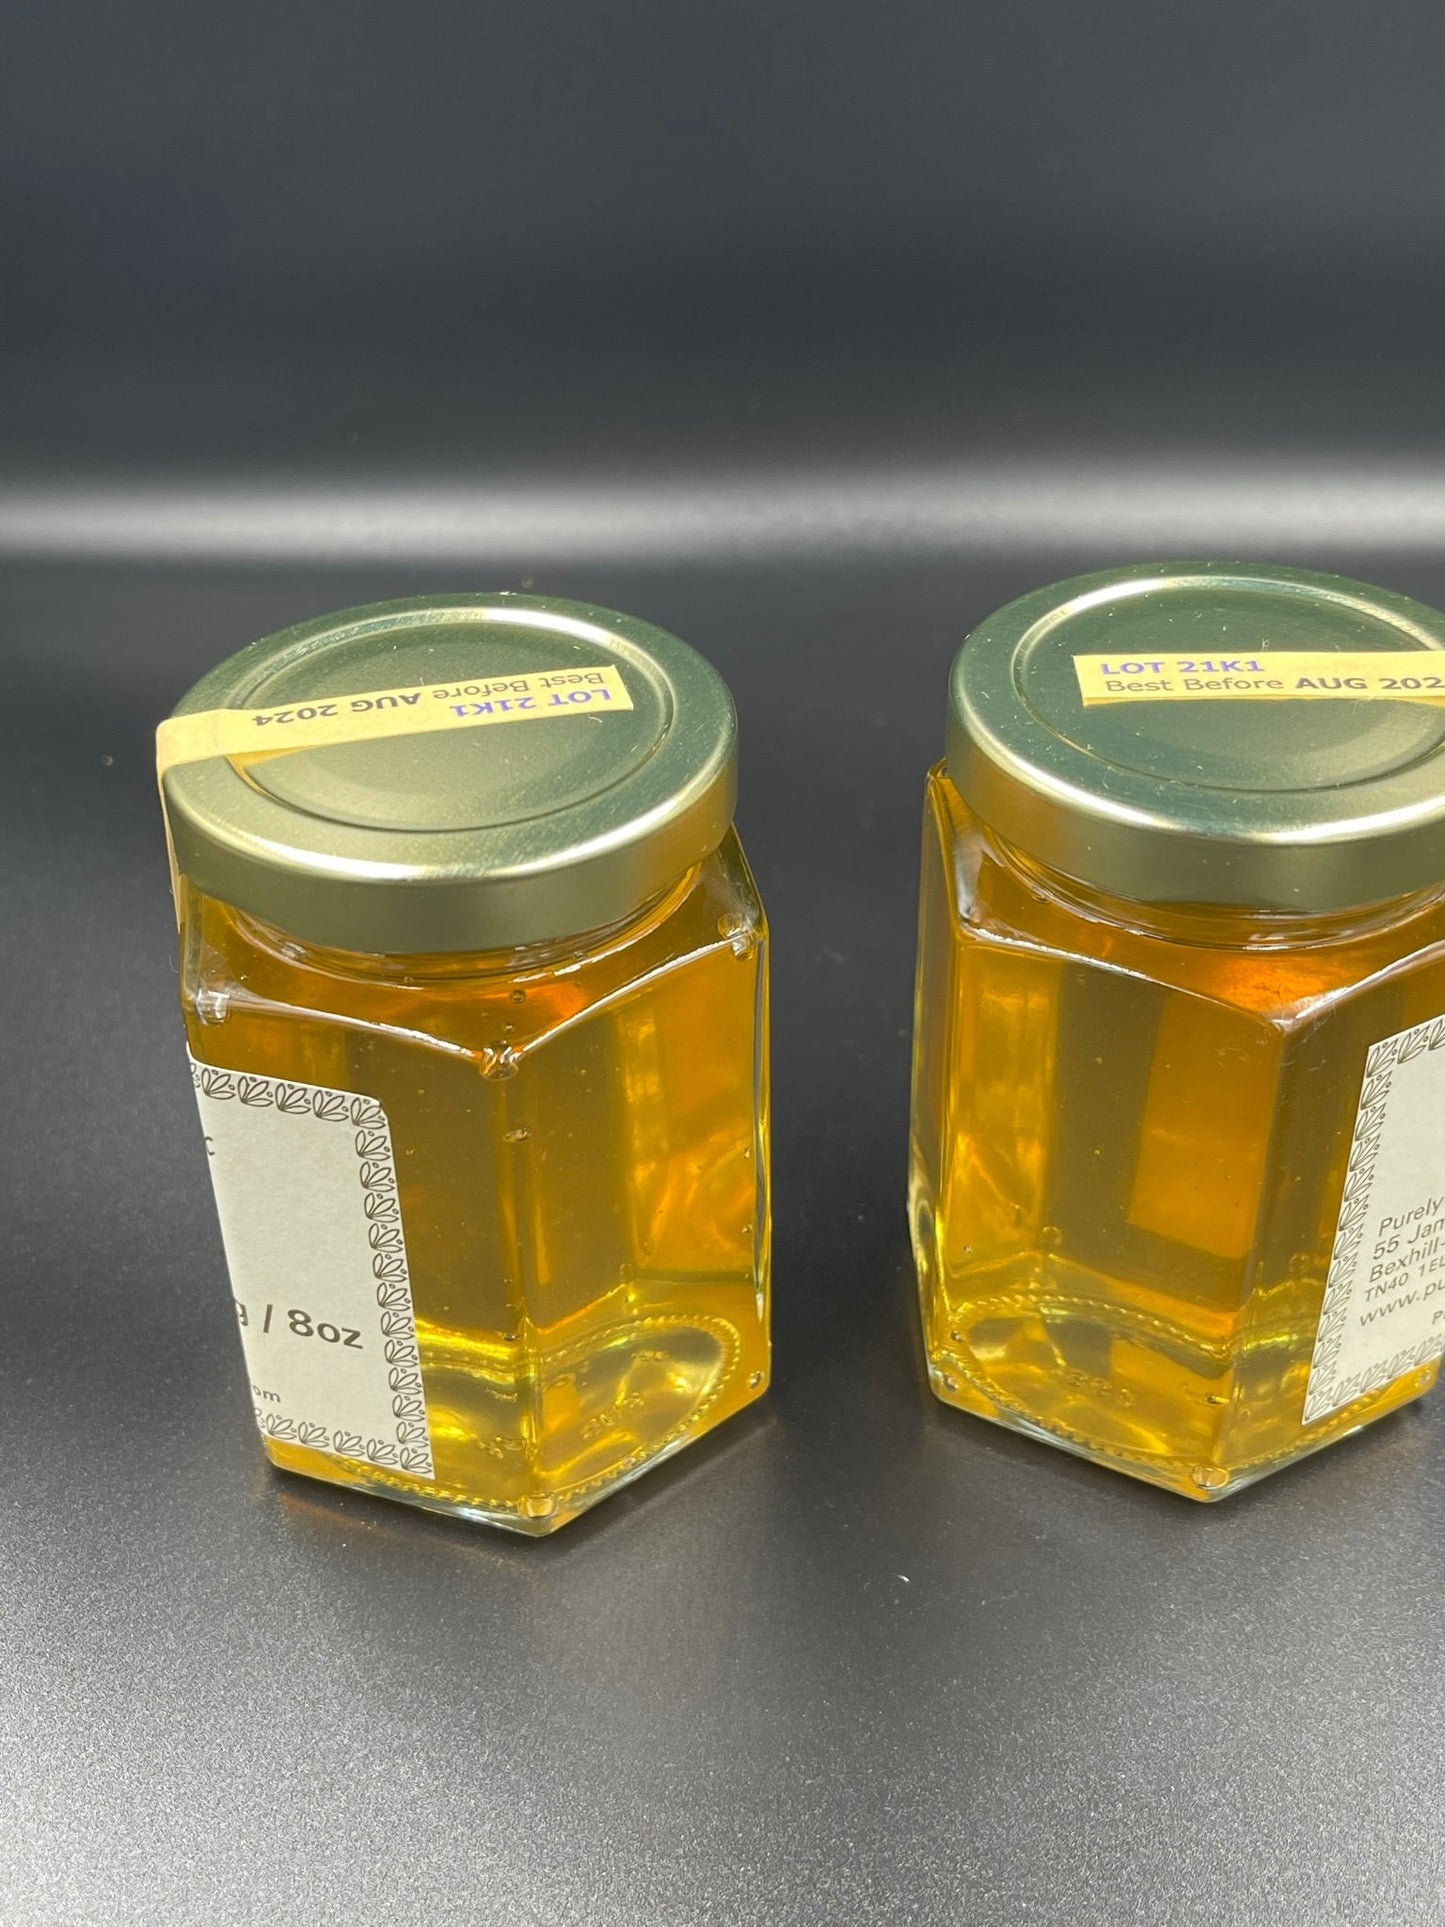 Classic Raw Honey, 3 jar set (3x227g/8oz) - Liquid (runny) honey